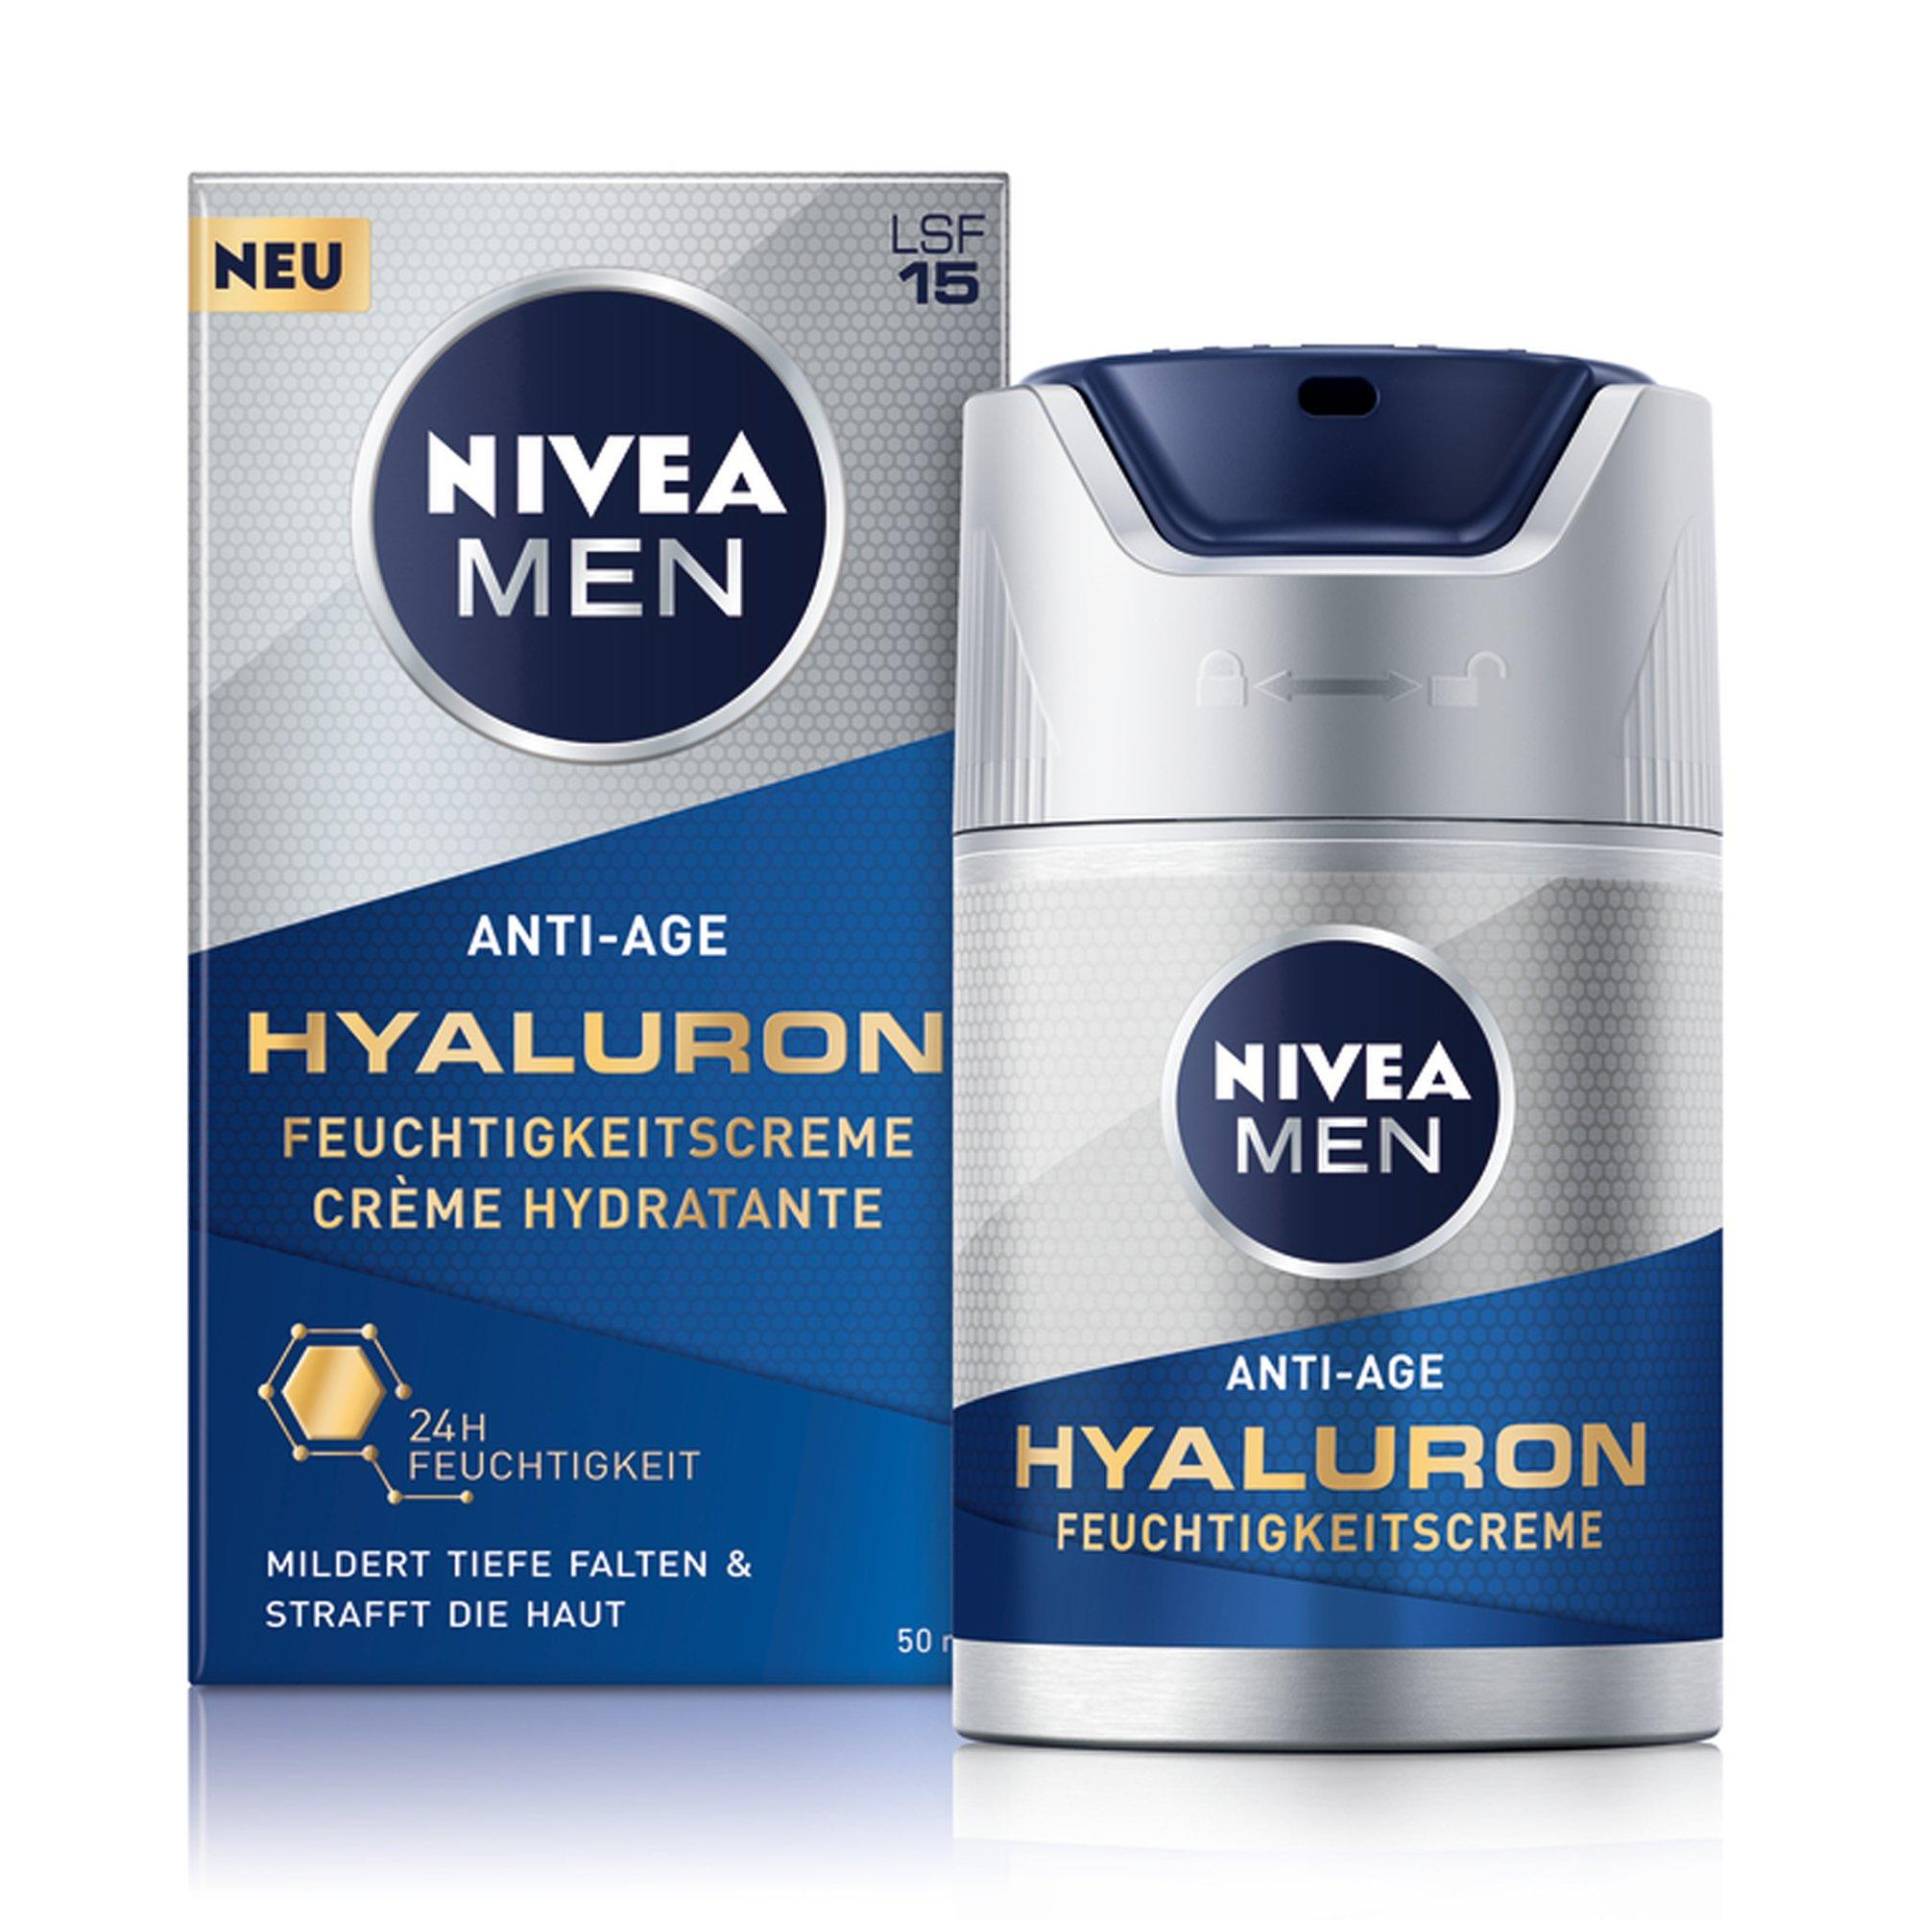 Anti-age Hyaluron Feuchtigkeitscreme Unisex  50ml von NIVEA